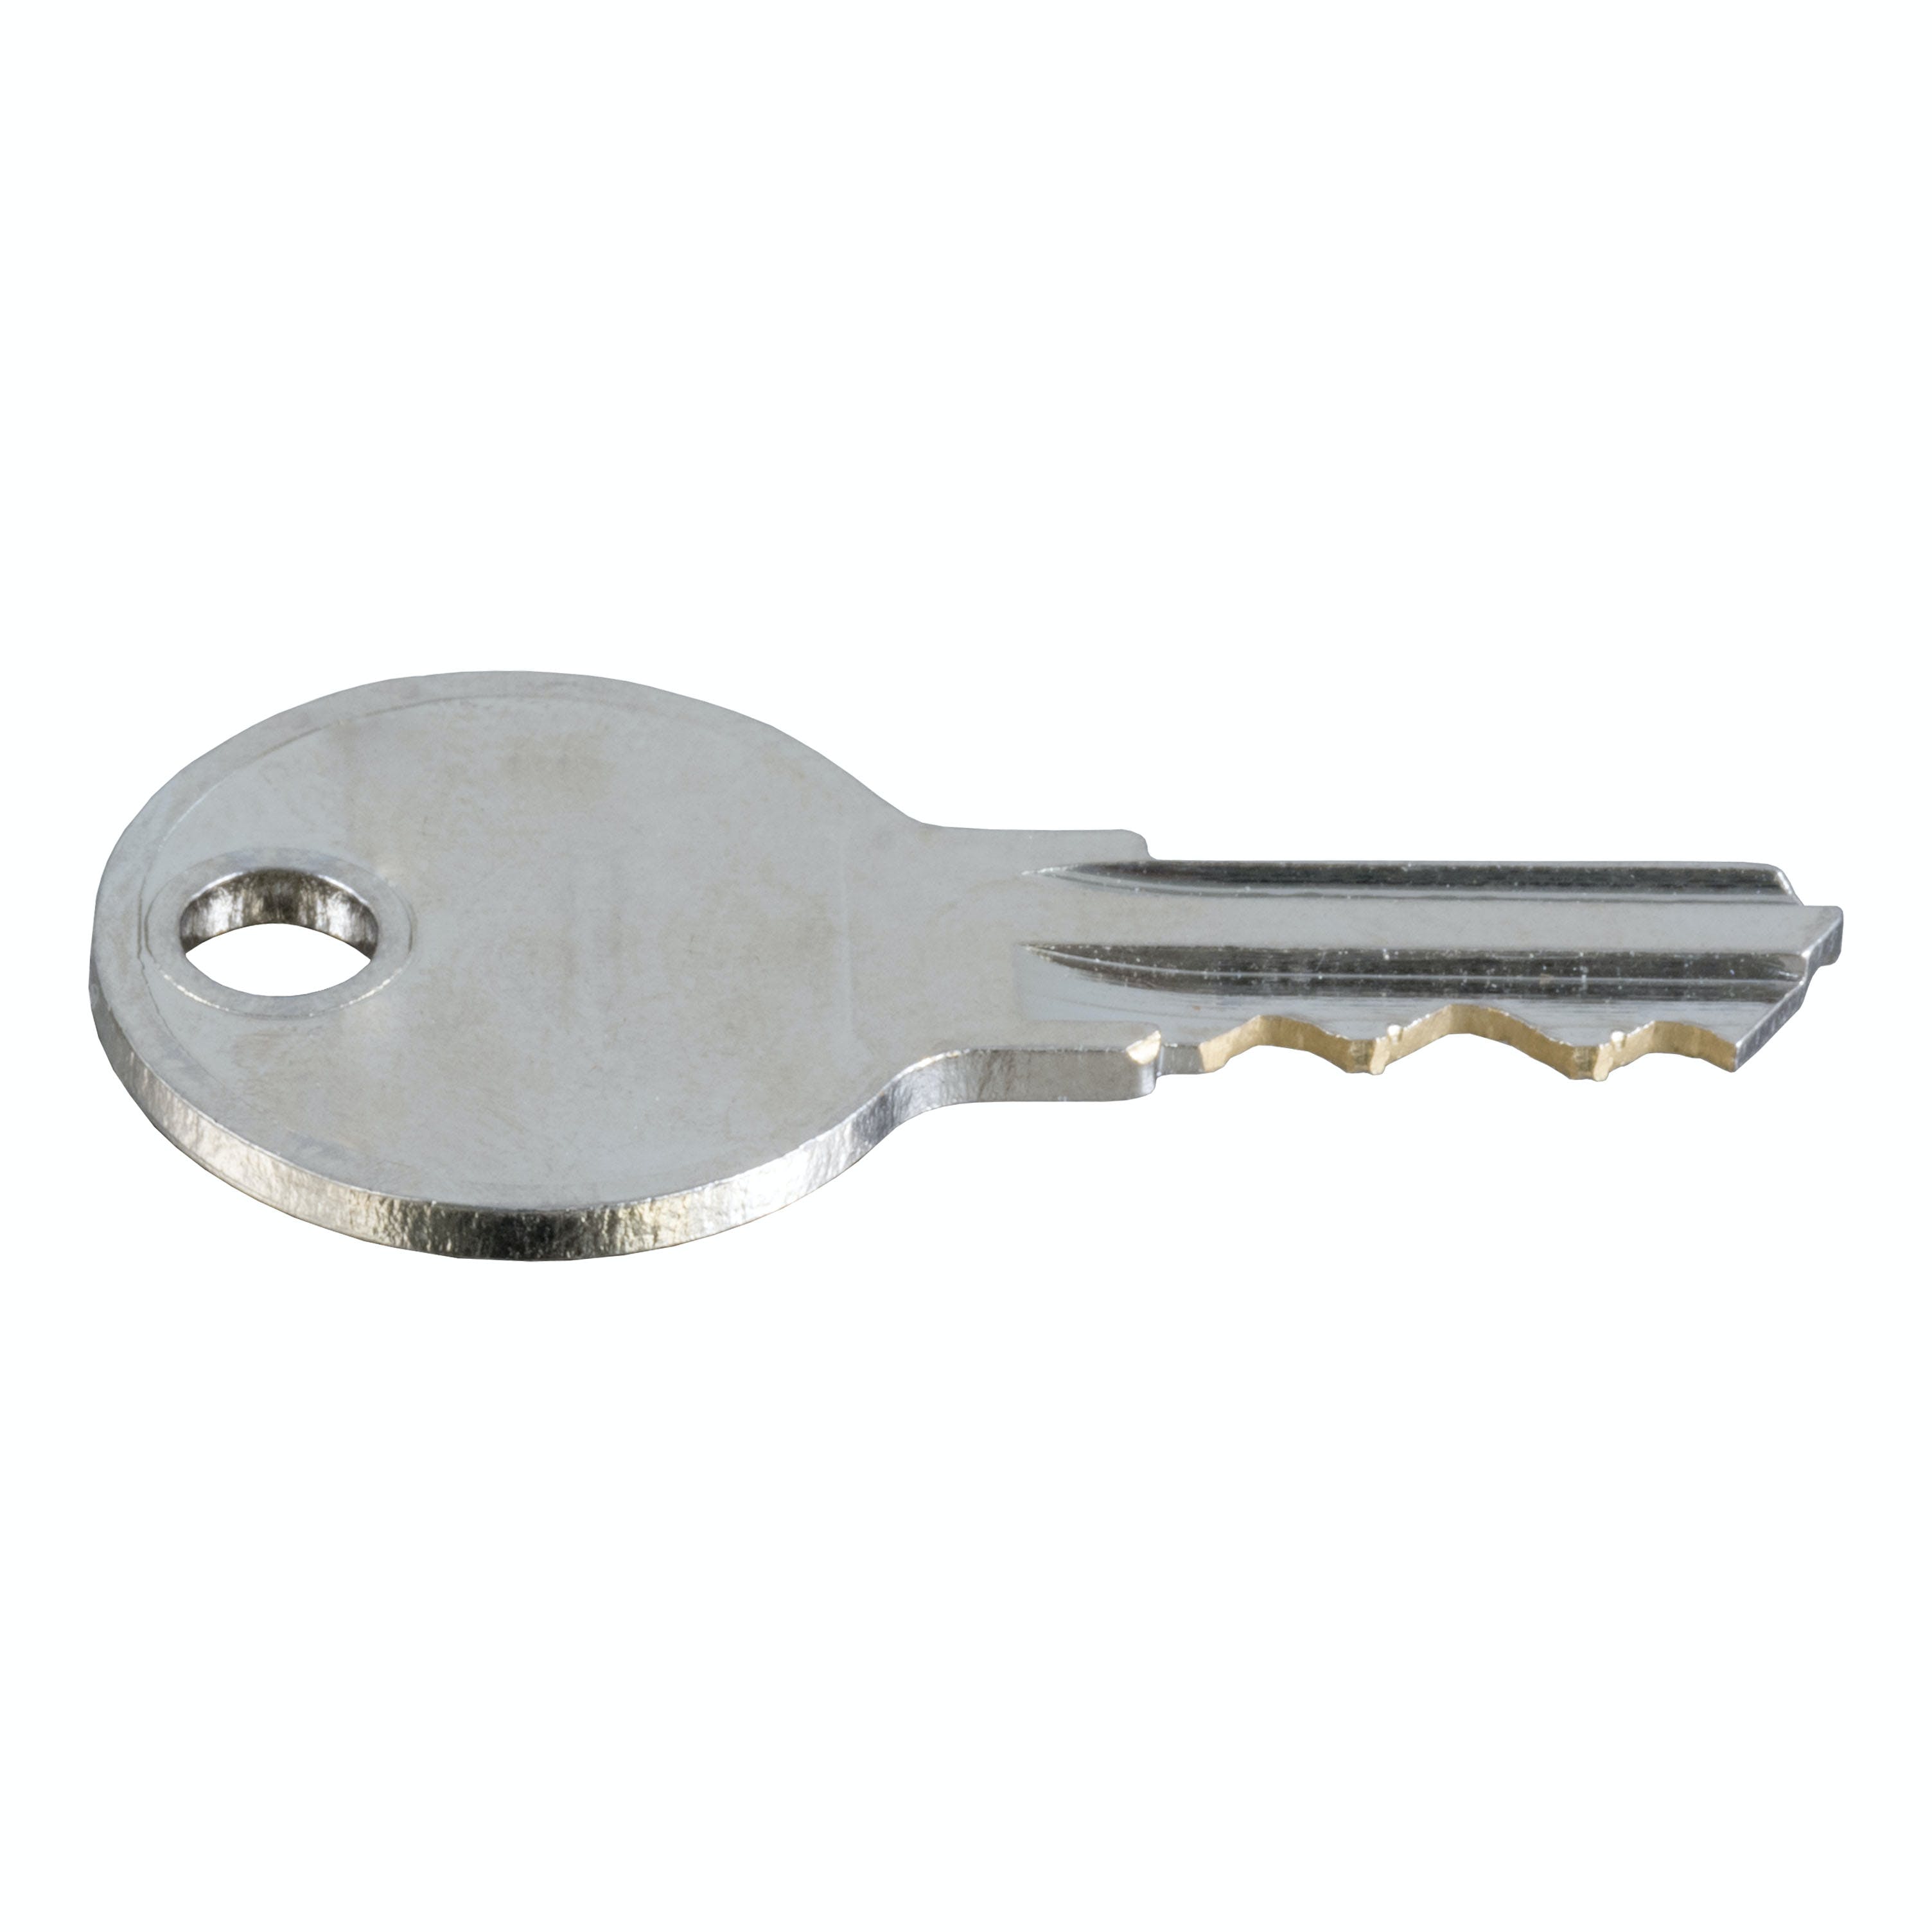 UWS KEYCH509 Replacement Keys